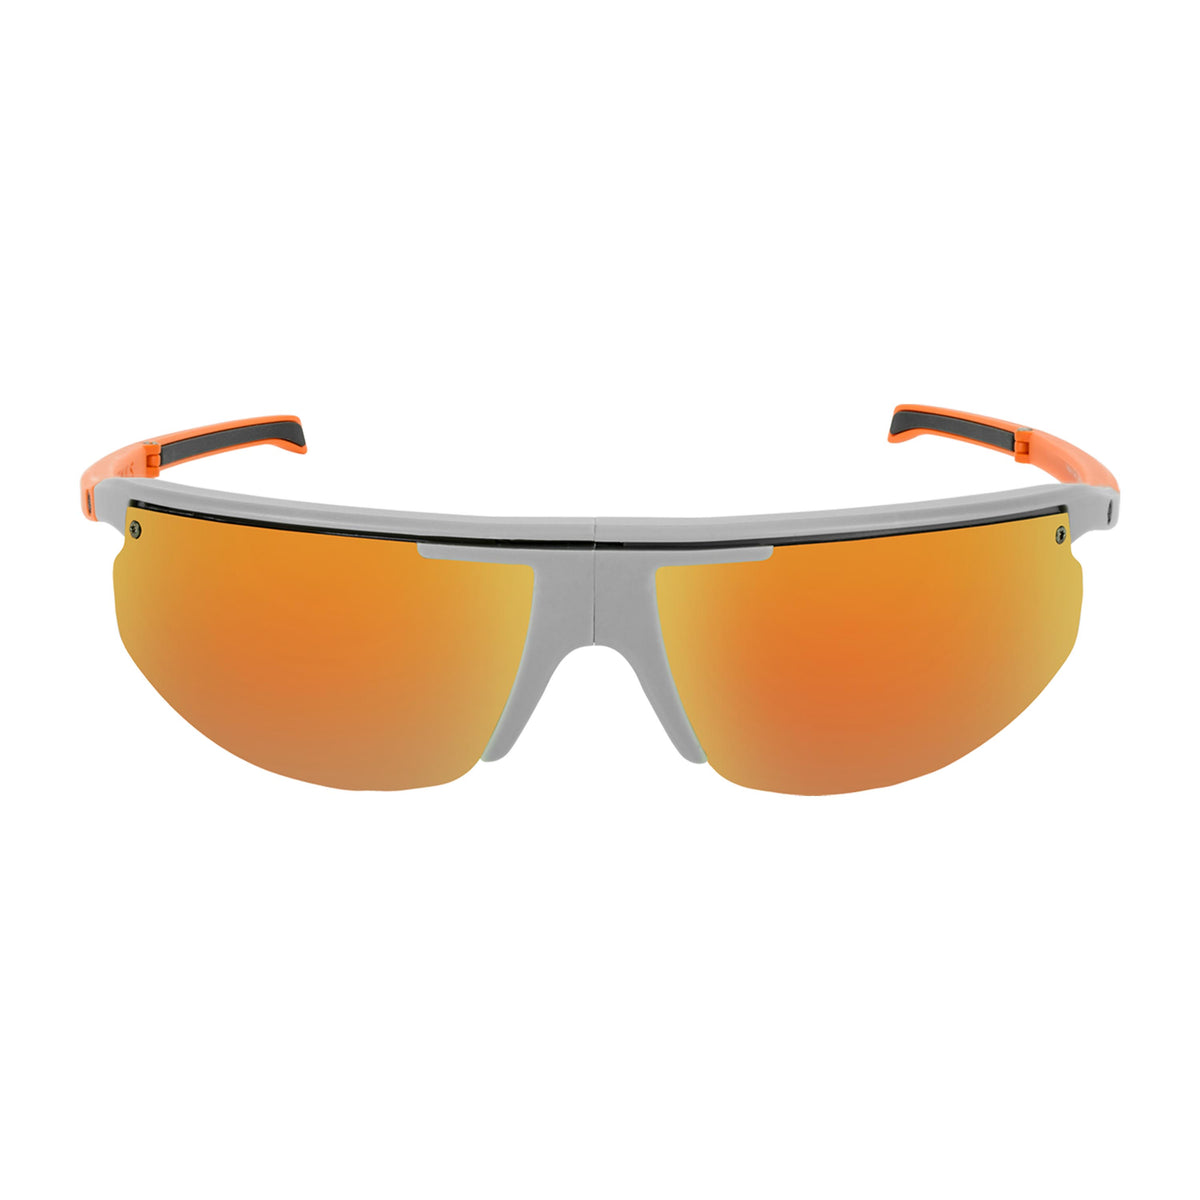 Popticals, Premium Compact Sunglasses, PopStar, 010040-OMGP, Polarized Sunglasses, Matte Gray/Orange Frame, Gray Lenses w/Orange Mirror Finish, Front View